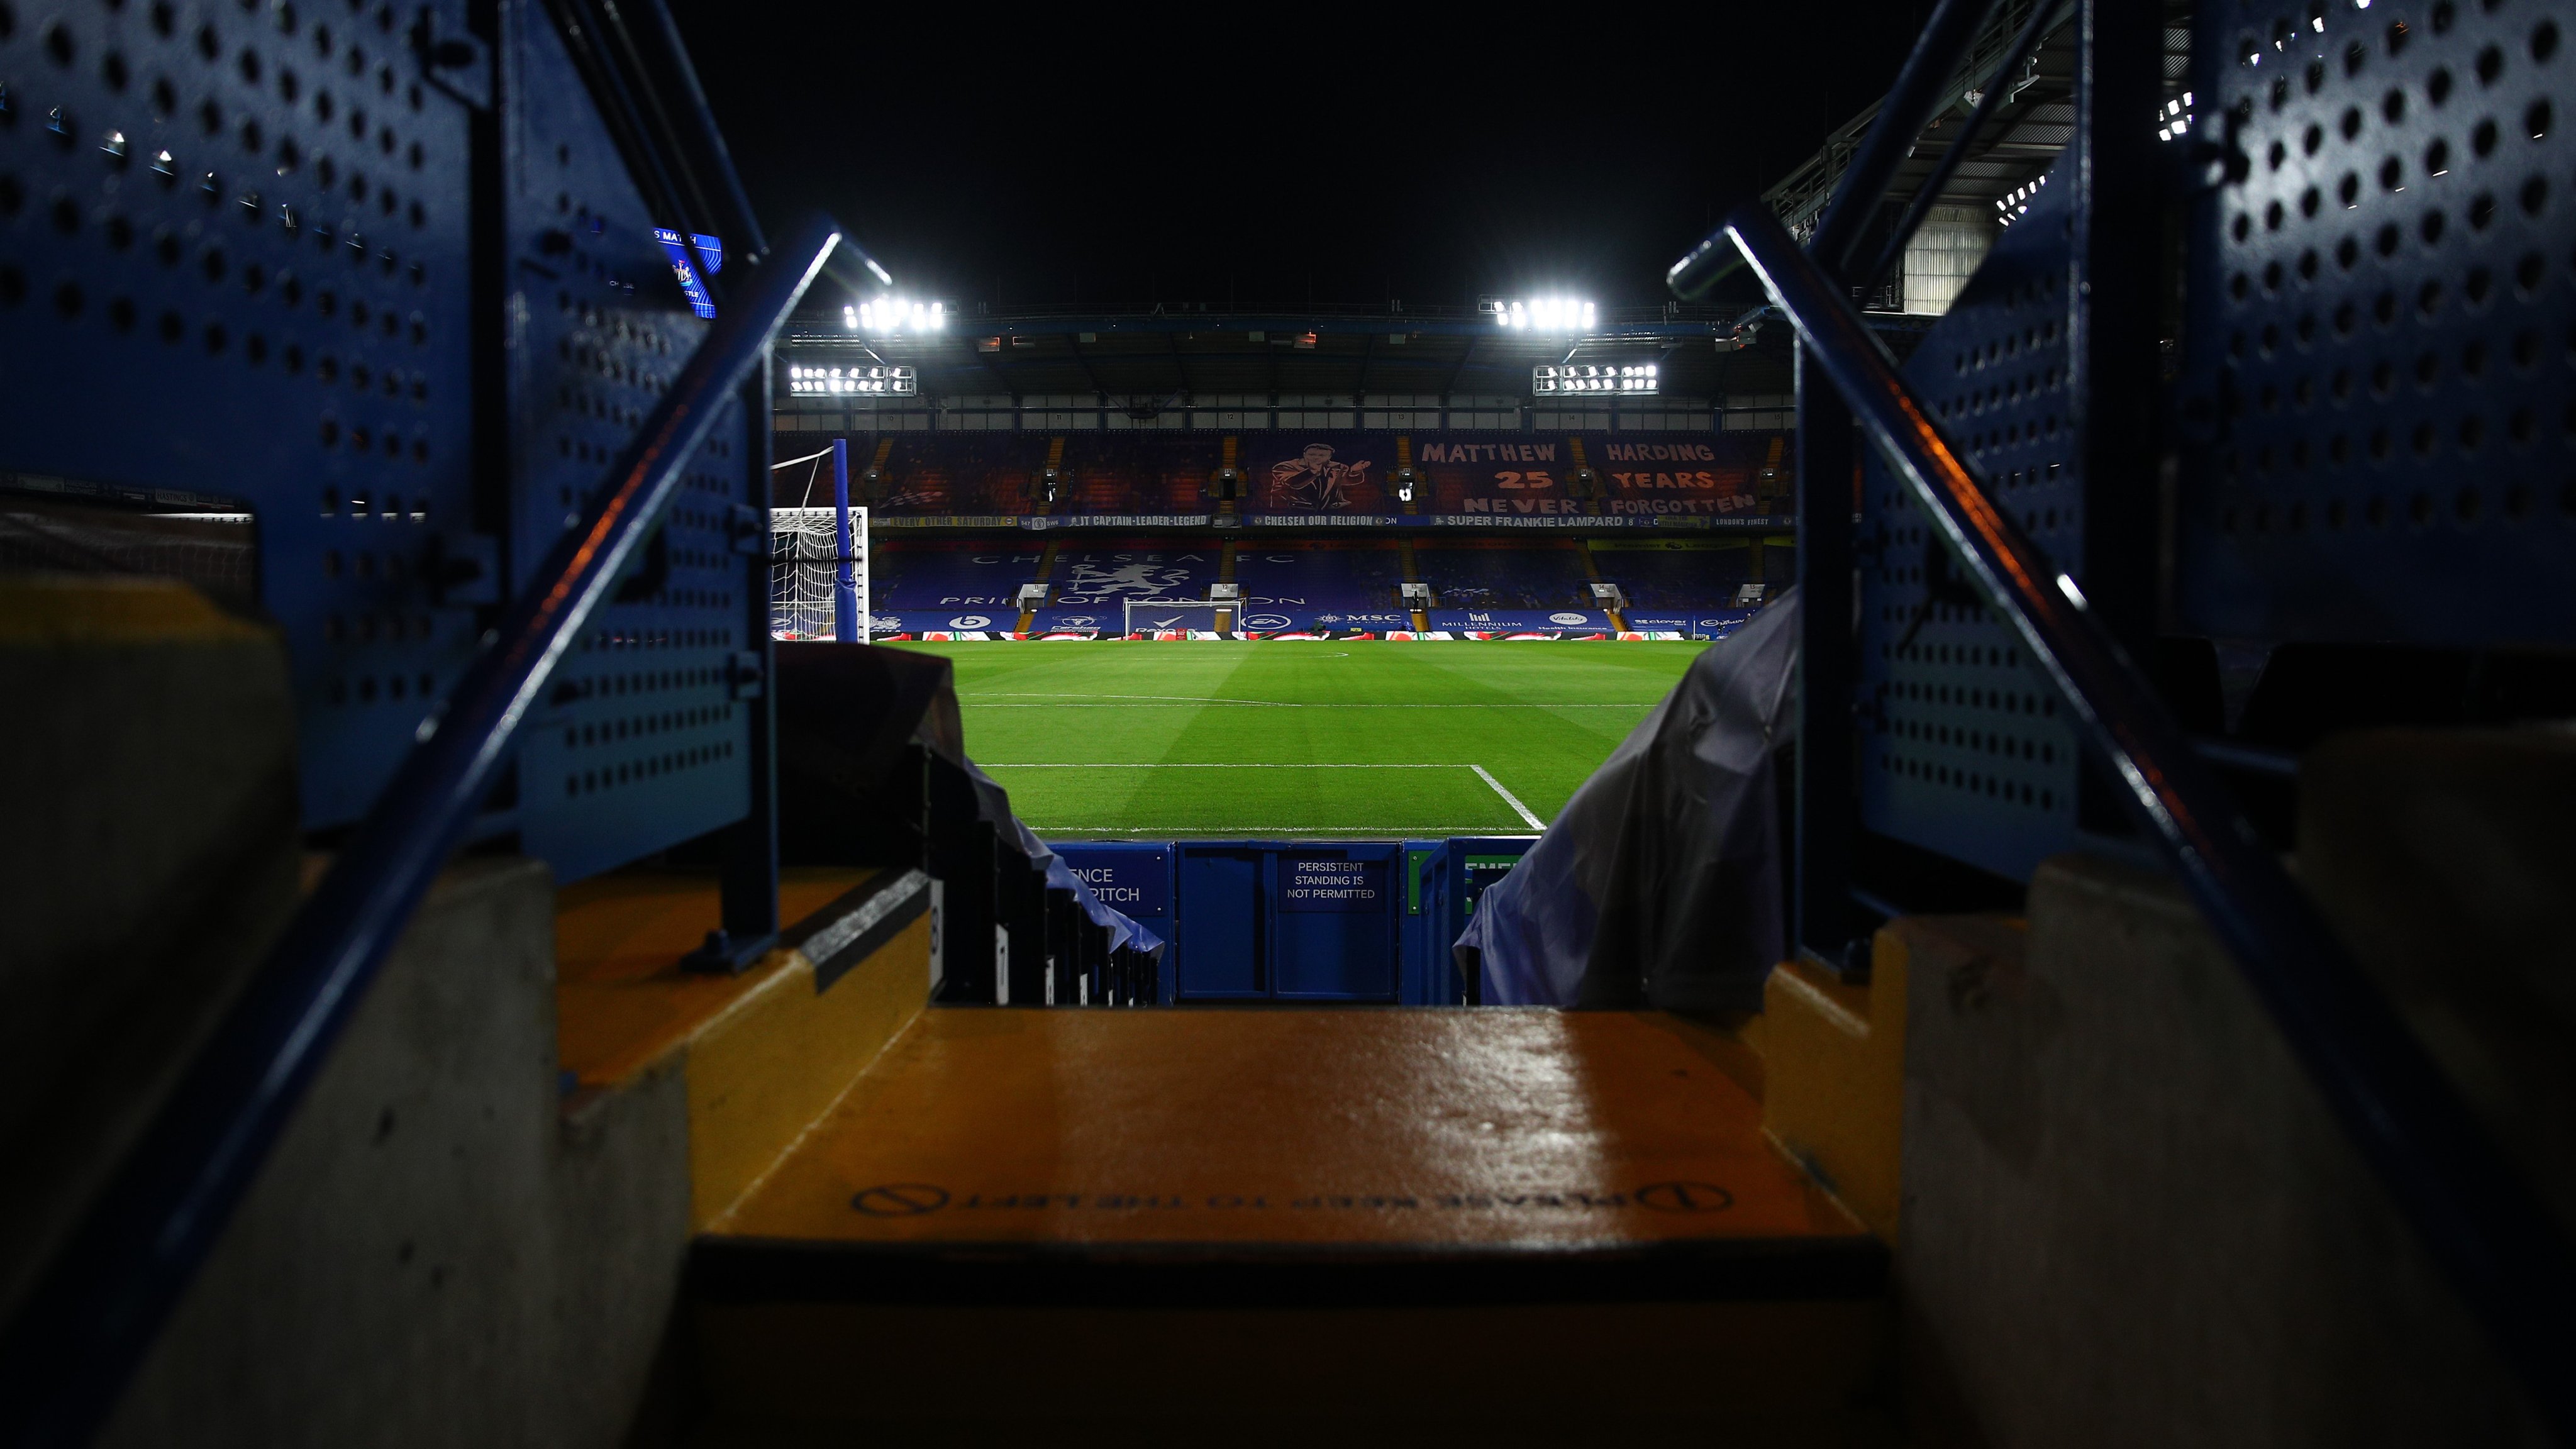 Stamford Bridge/استمفورد بریج